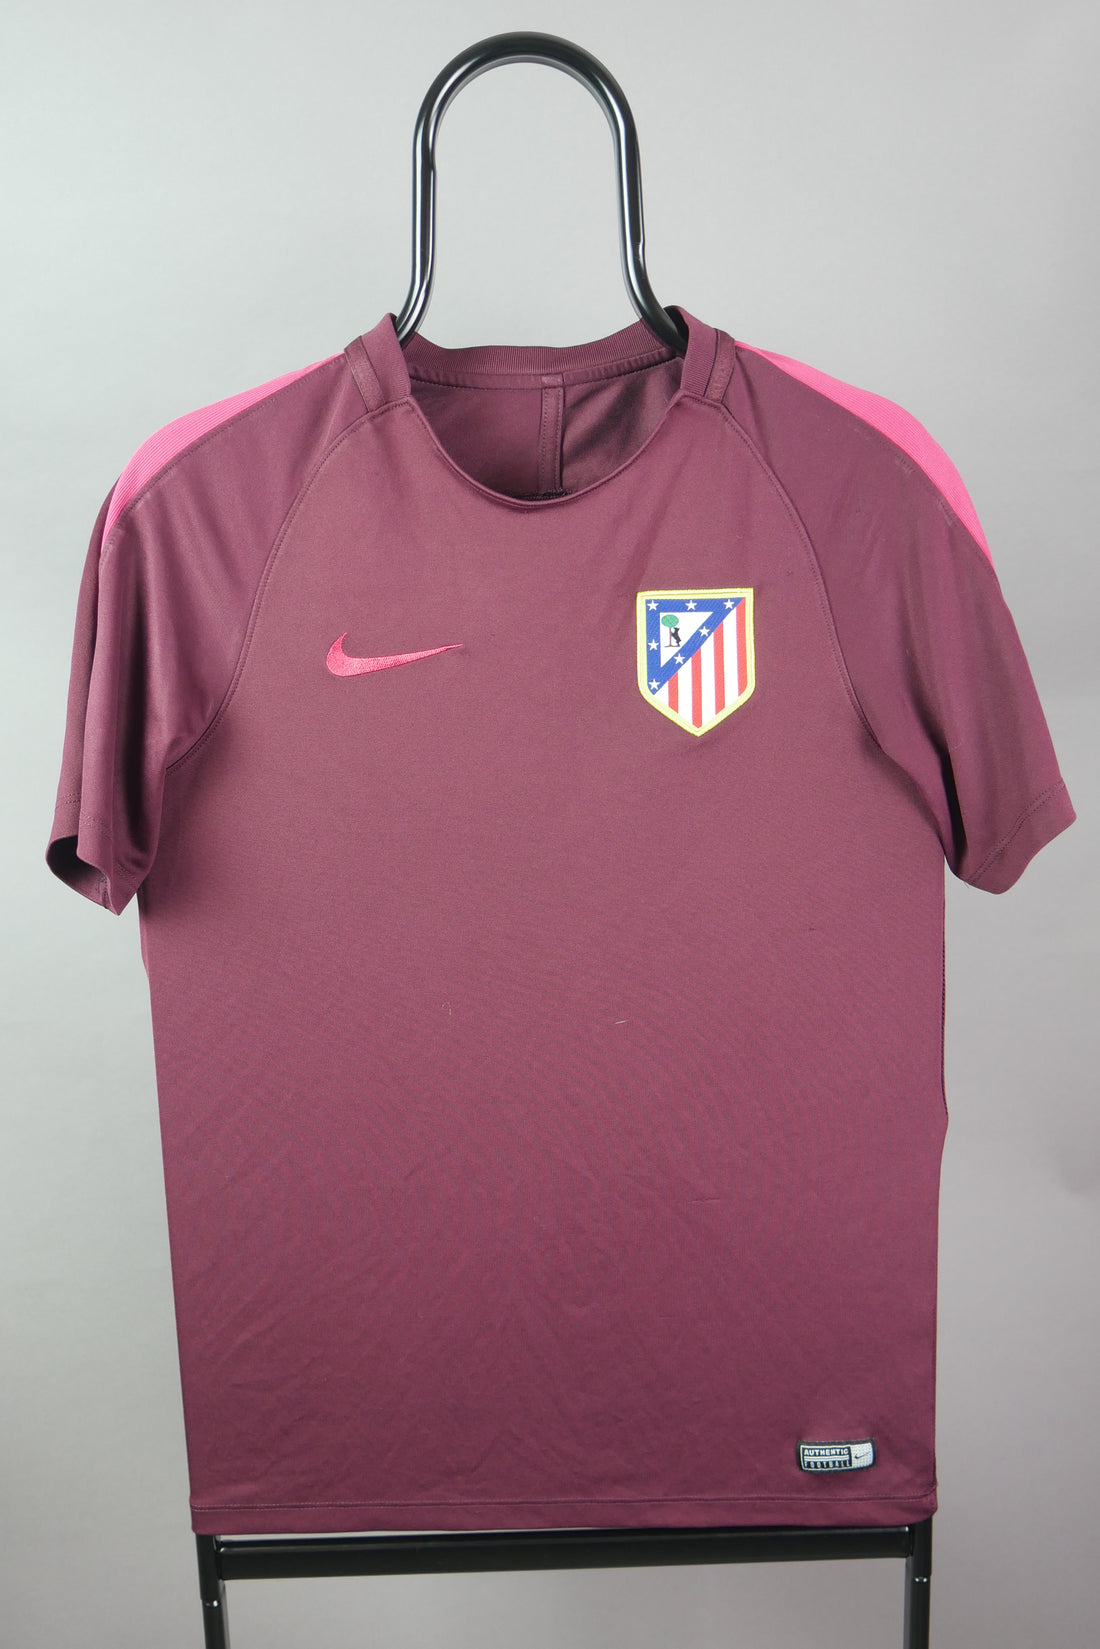 The Nike Football Shirt (XS)